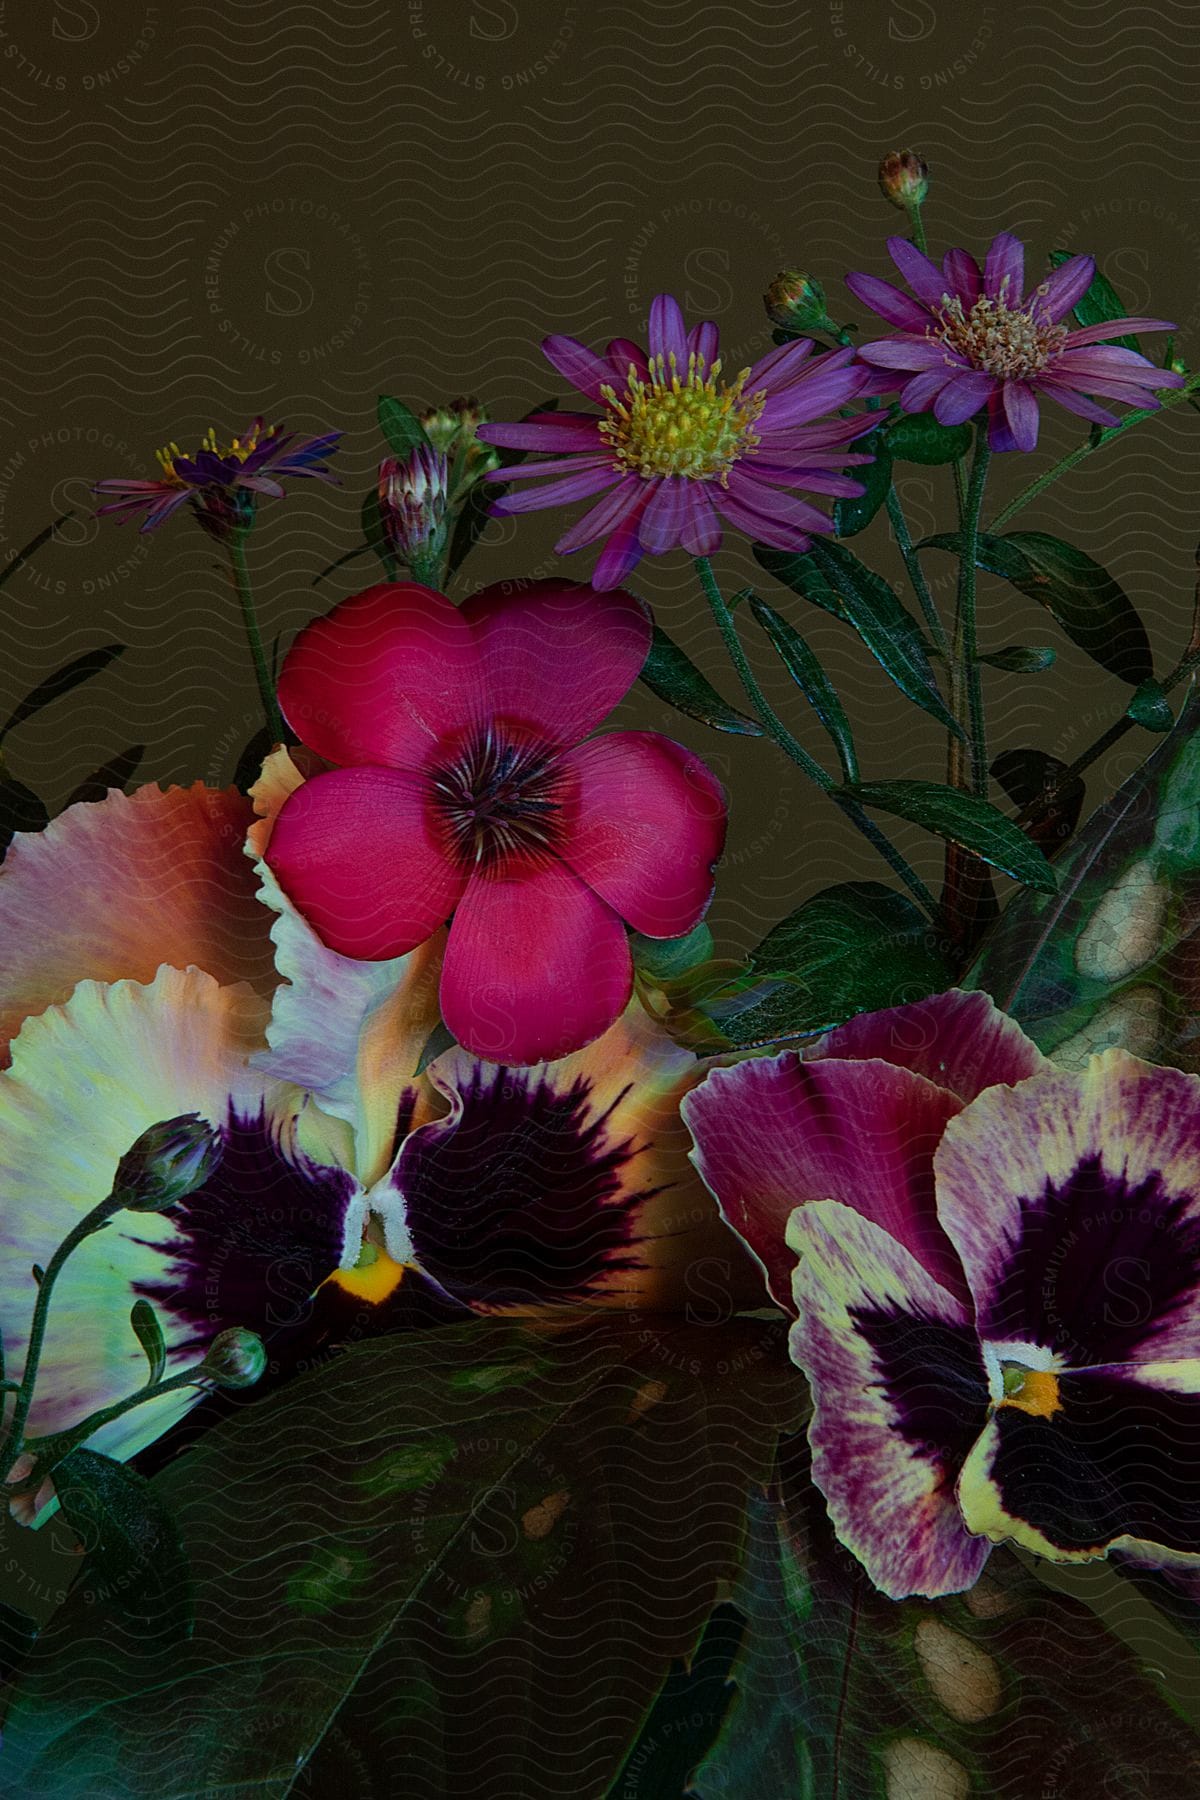 flowers arrangement with colorful petals